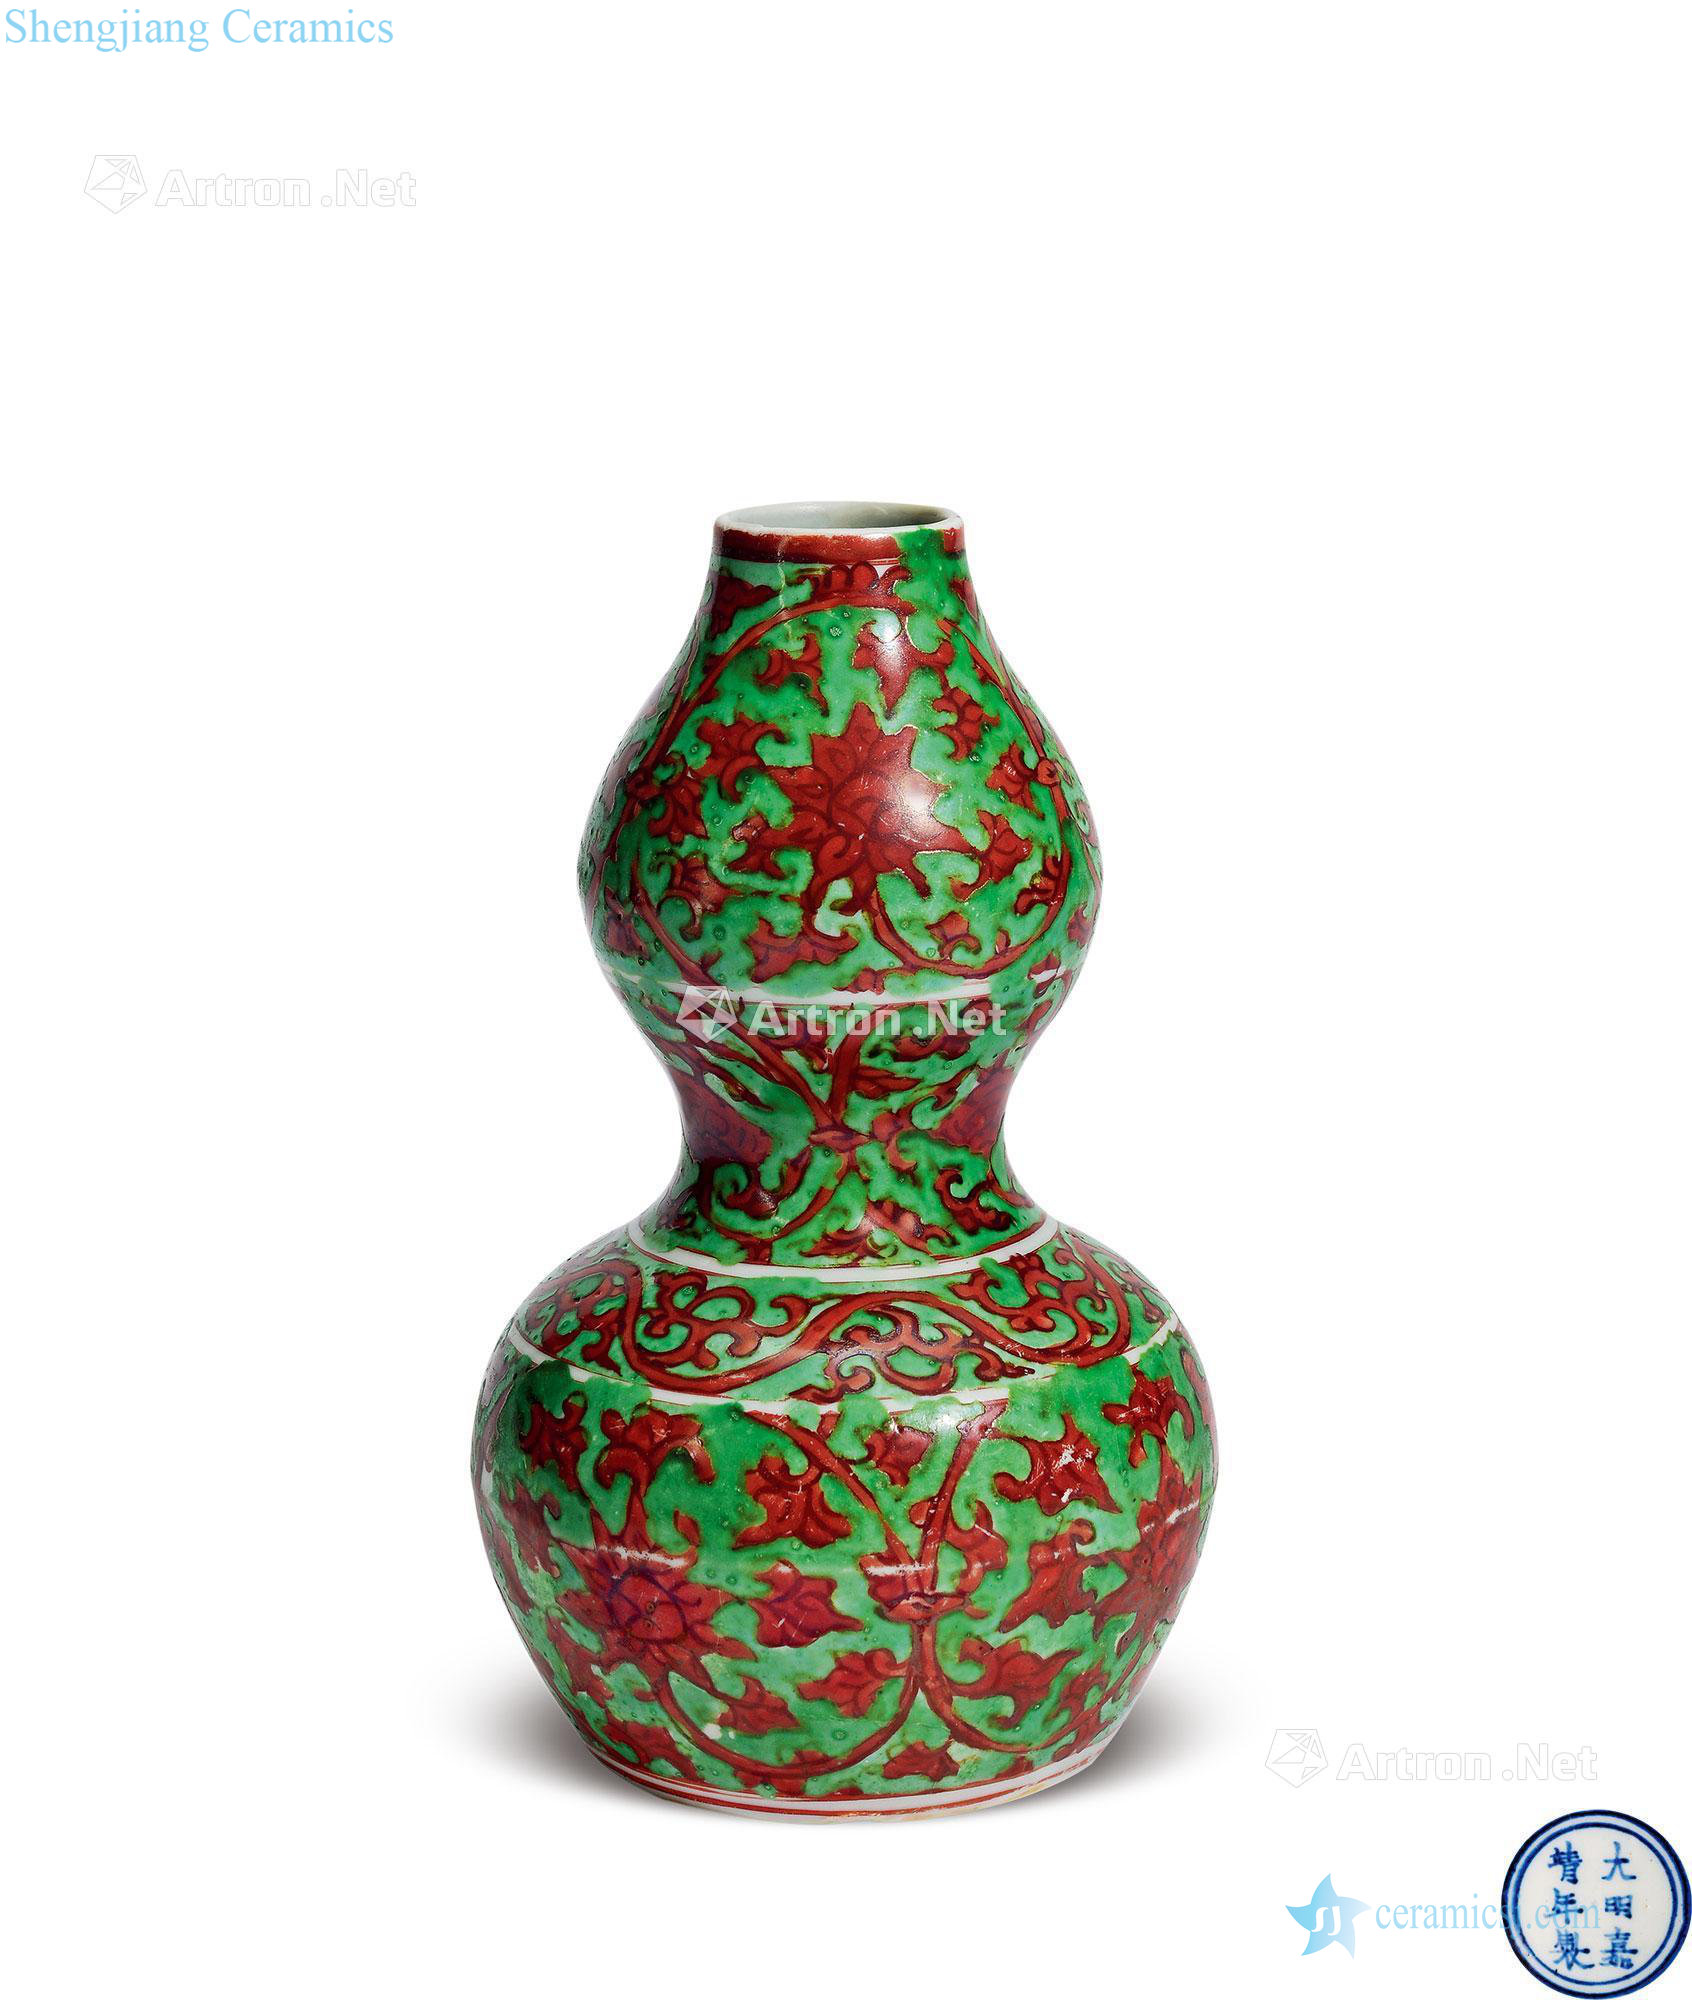 Ming jiajing green vitriol red bottle gourd